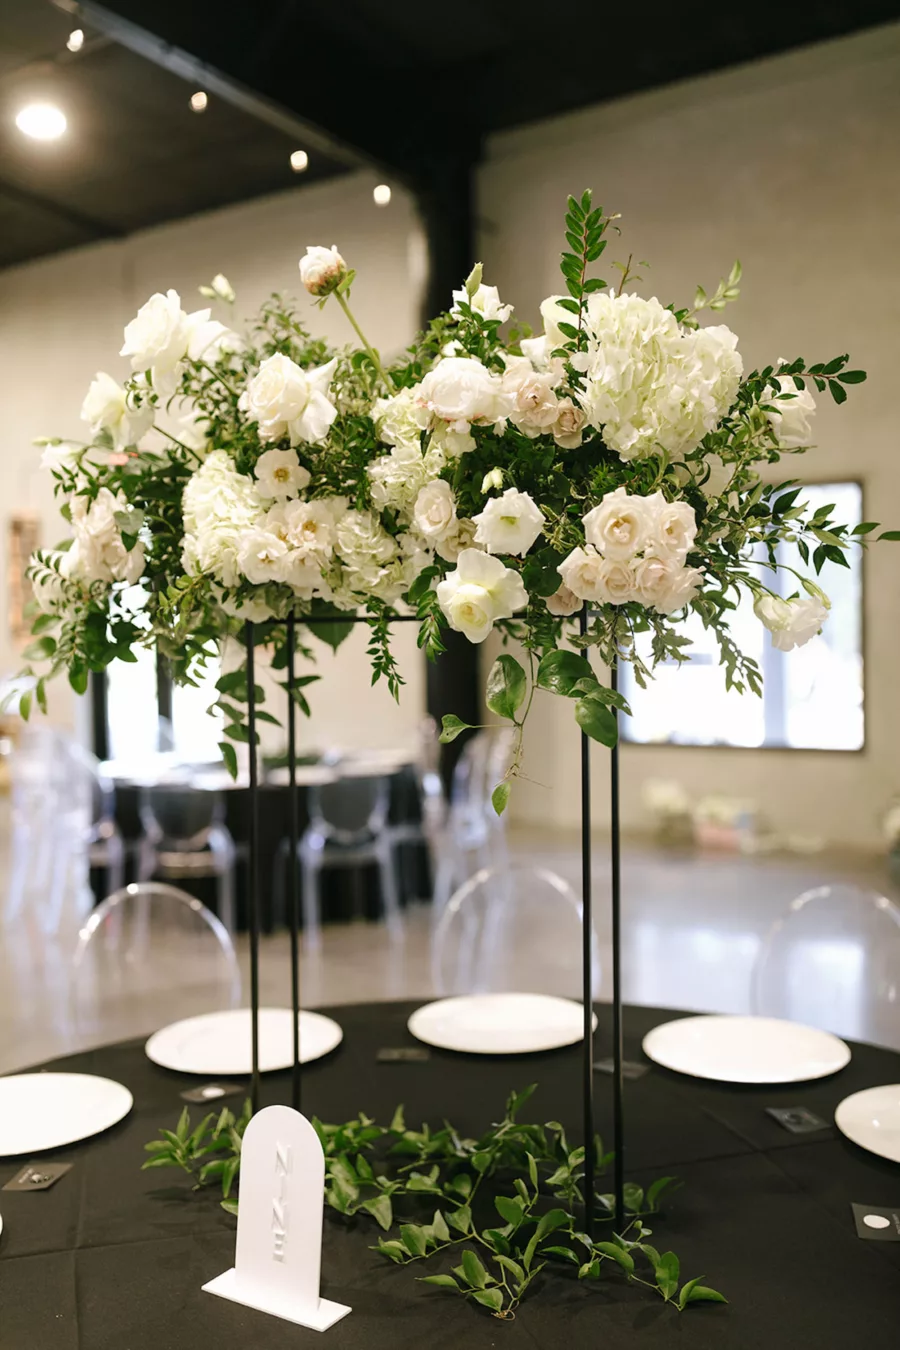 Tall Black Flower Stand with White Roses, Hydrangeas, and Greenery Centerpiece Decor Ideas | Tampa Bay Florist Bloom Shakalaka